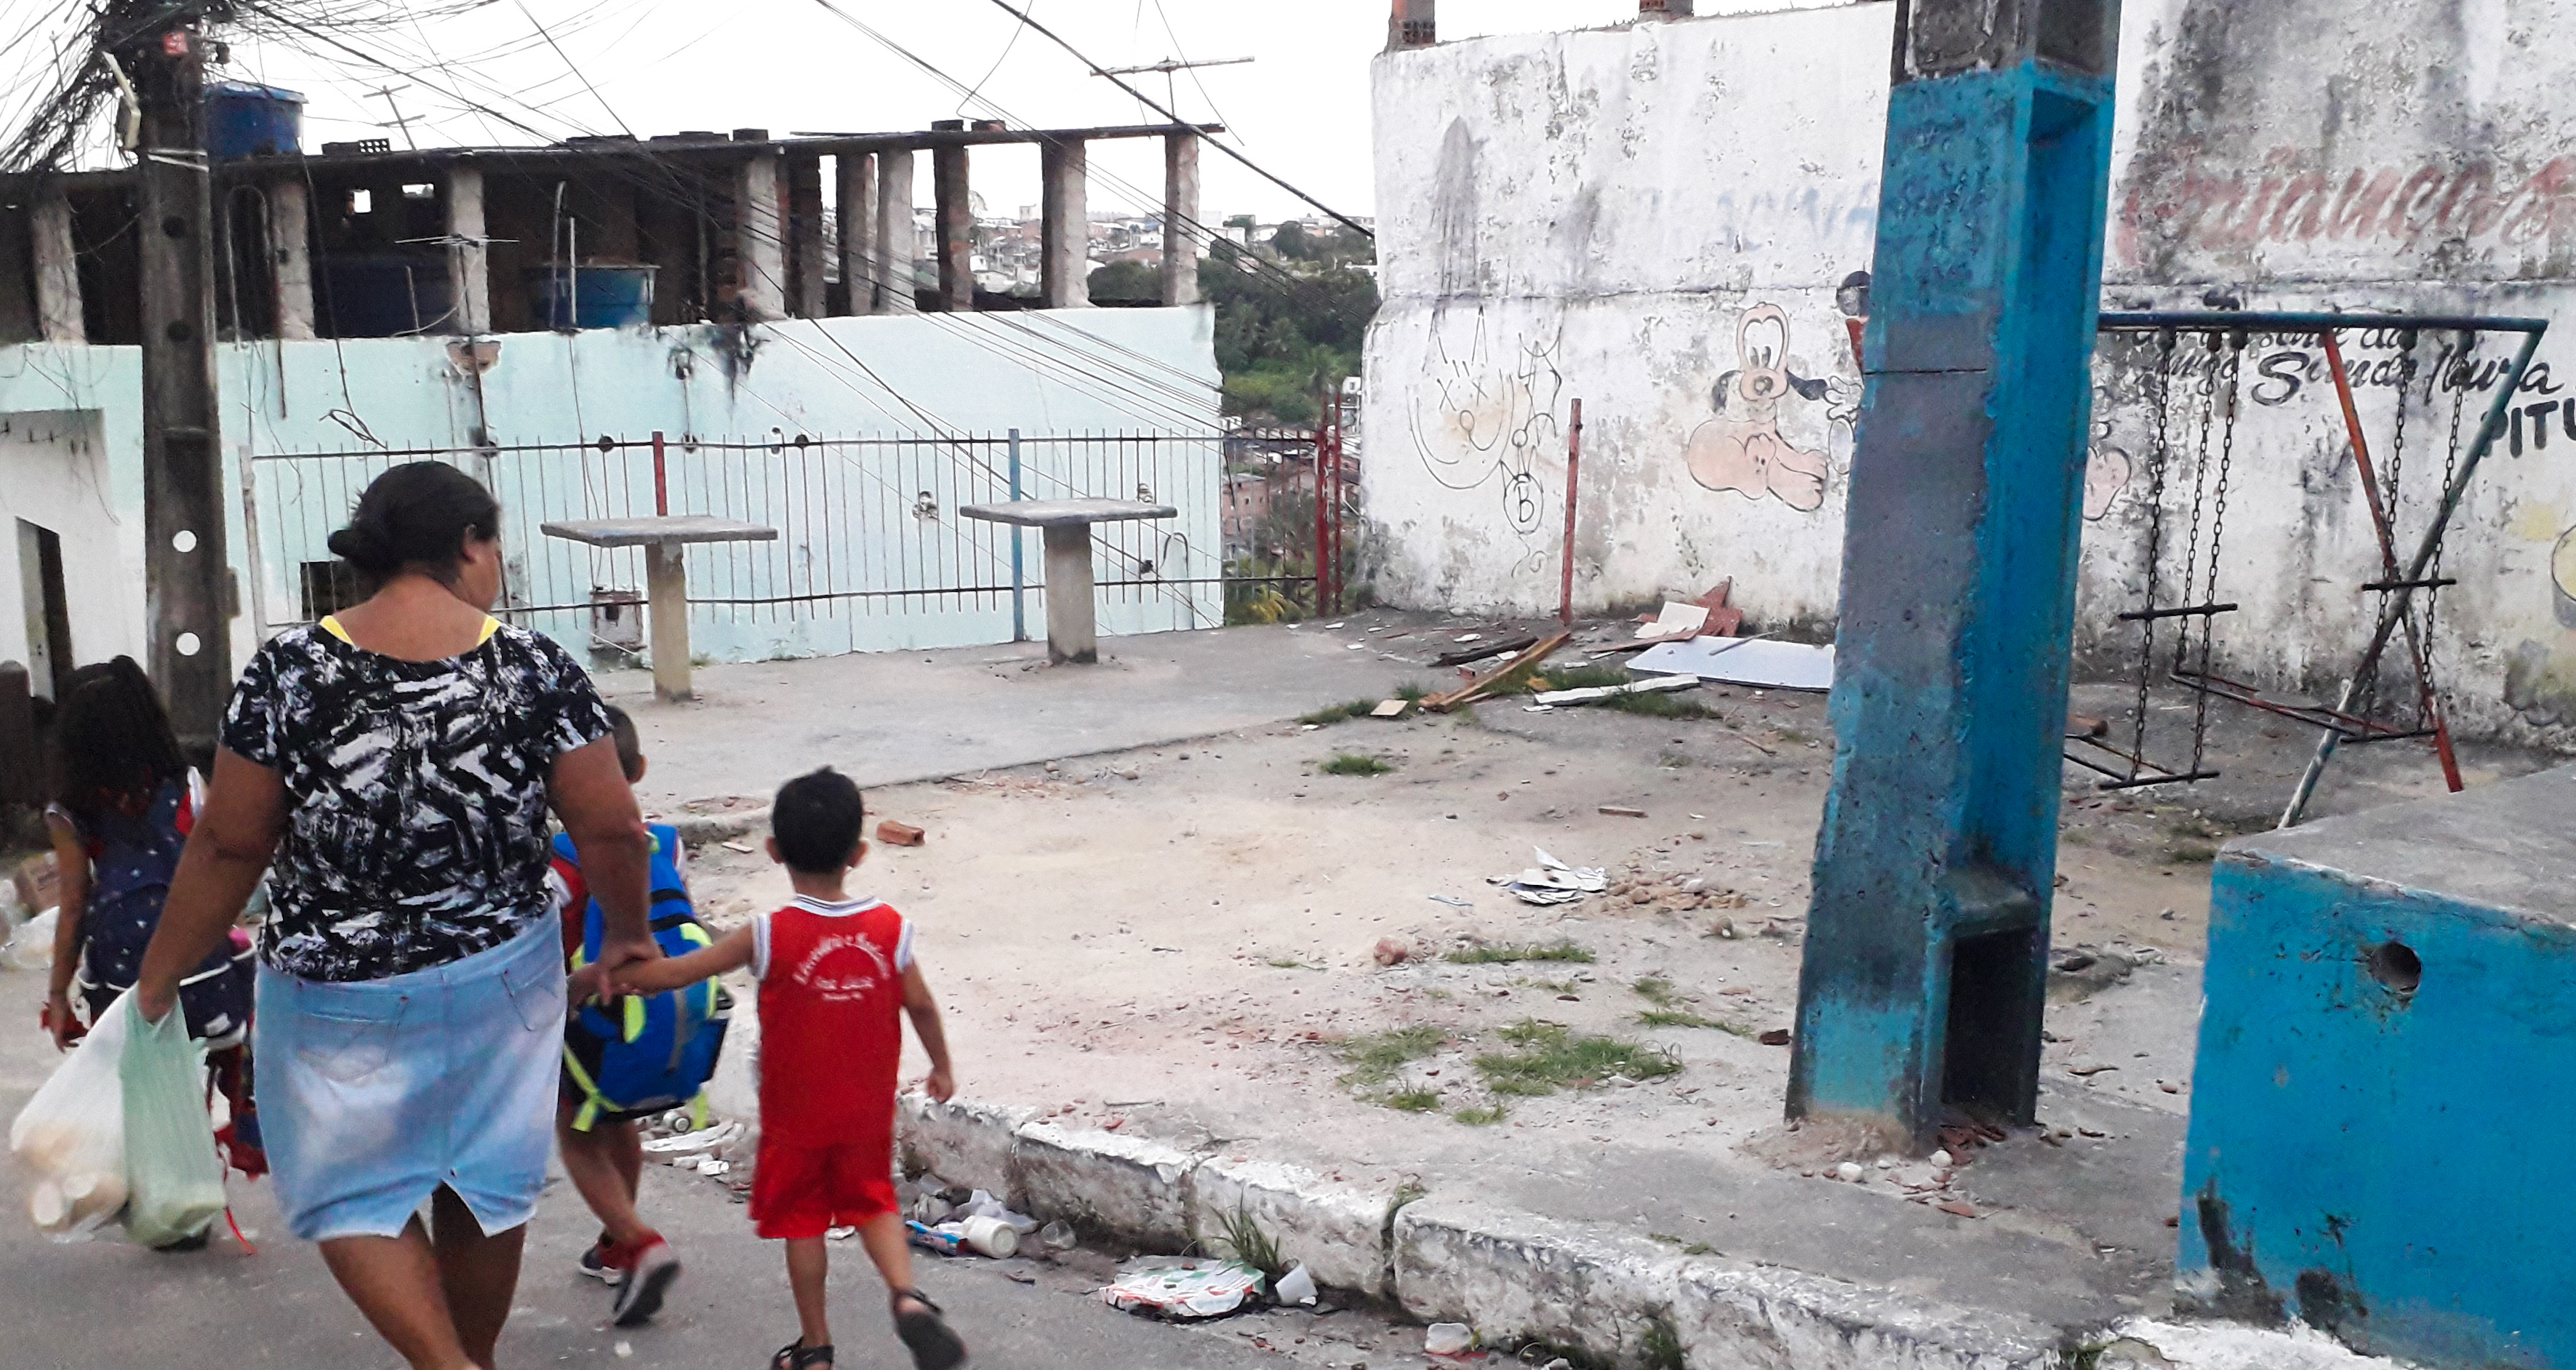 Espaços públicos de lazer e esporte: o abismo entre a favela e a área nobre